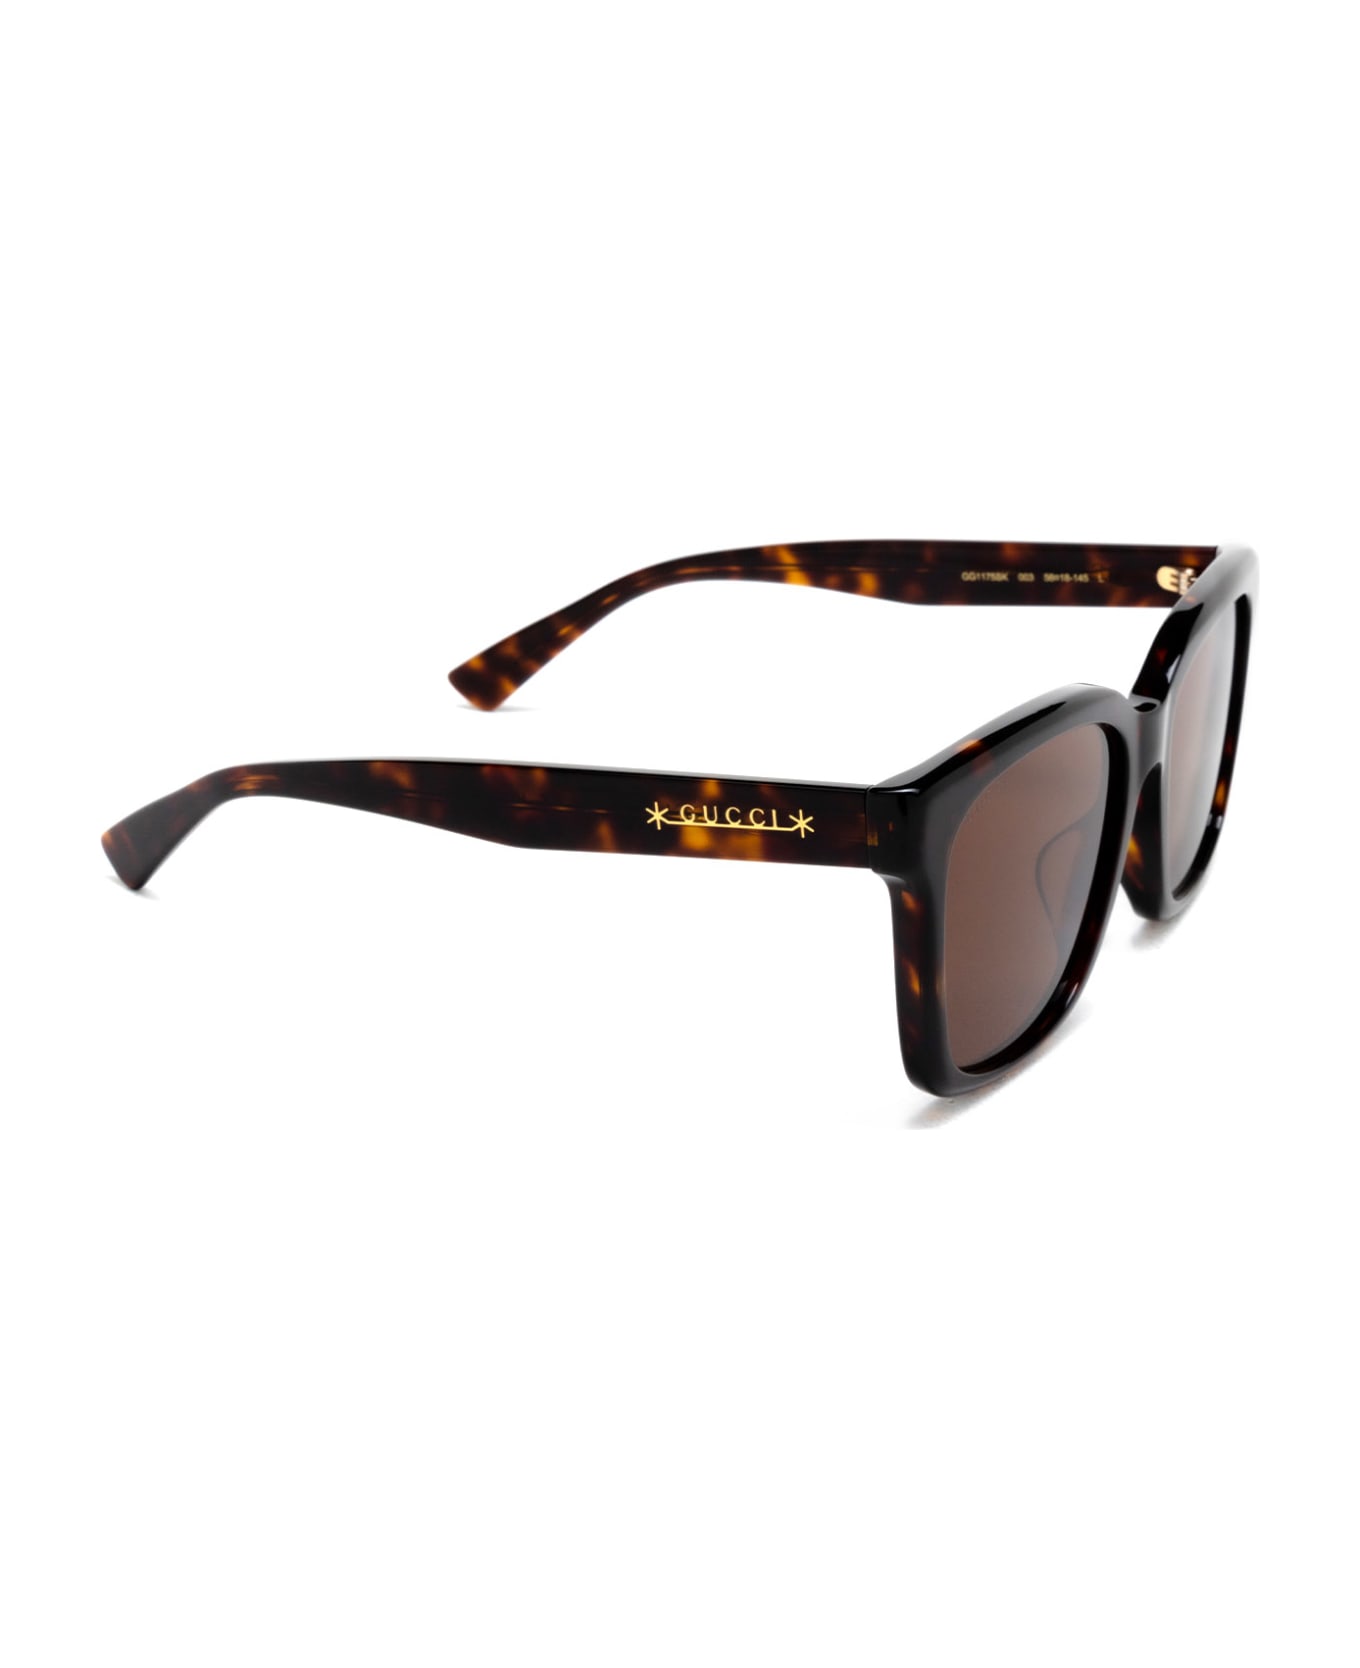 Gucci Eyewear Gg1175sk Havana Sunglasses - Havana